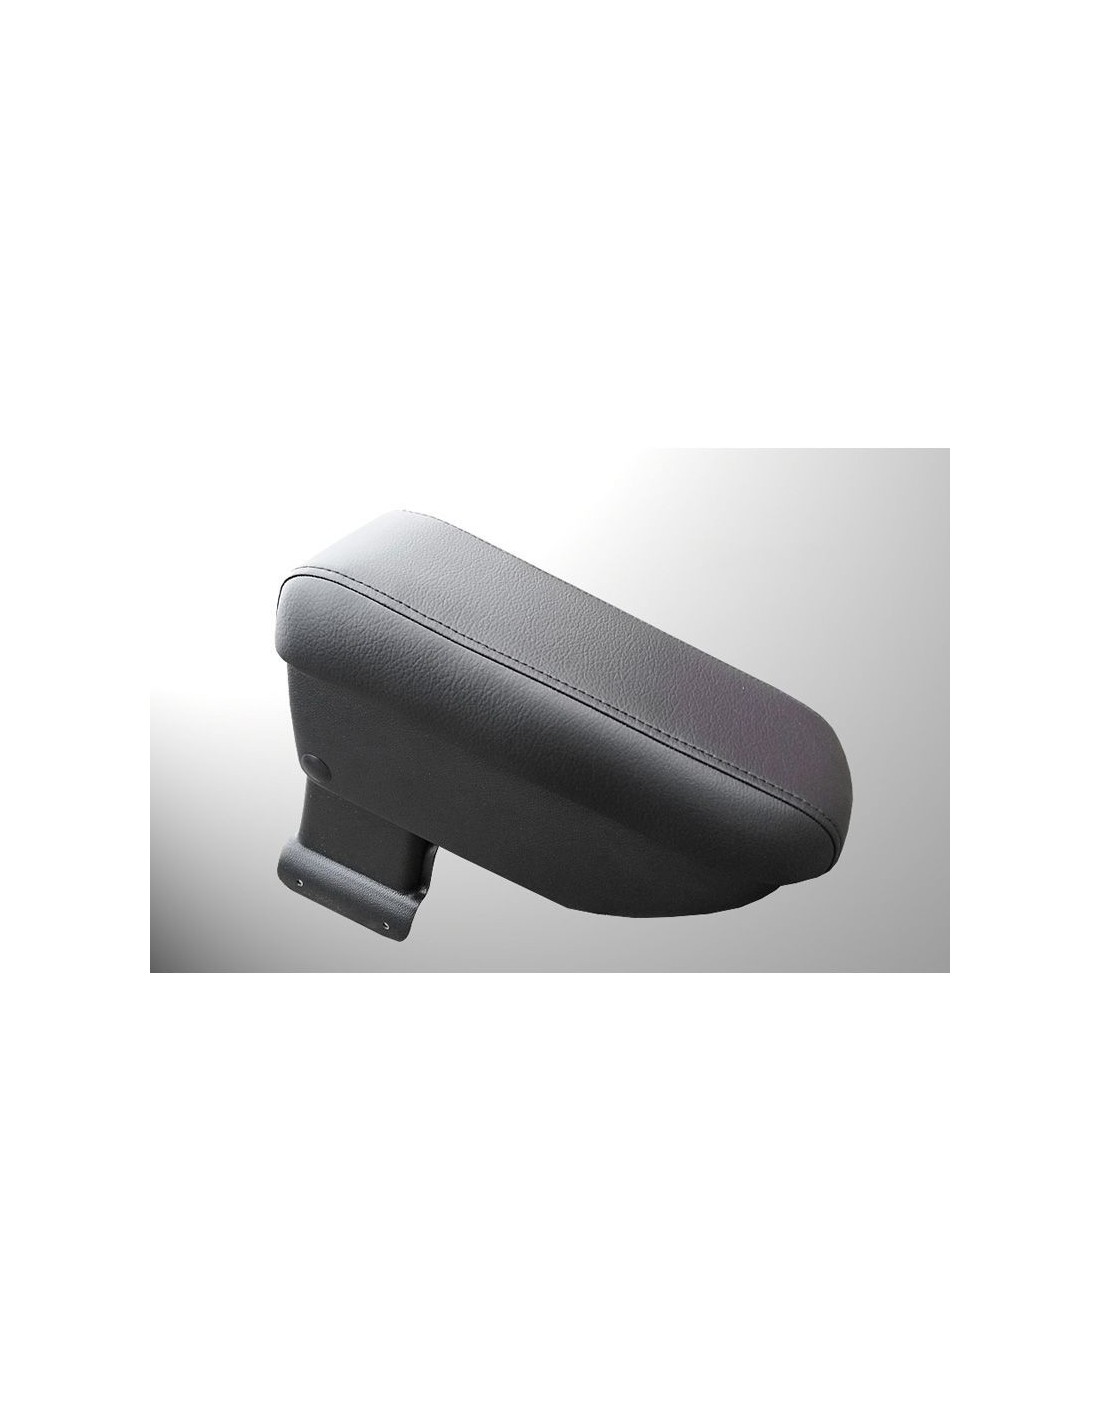 Auto Leder Mittelarmlehne Für Smart Fortwo Forfour 2014-2019 Armlehne USB DE